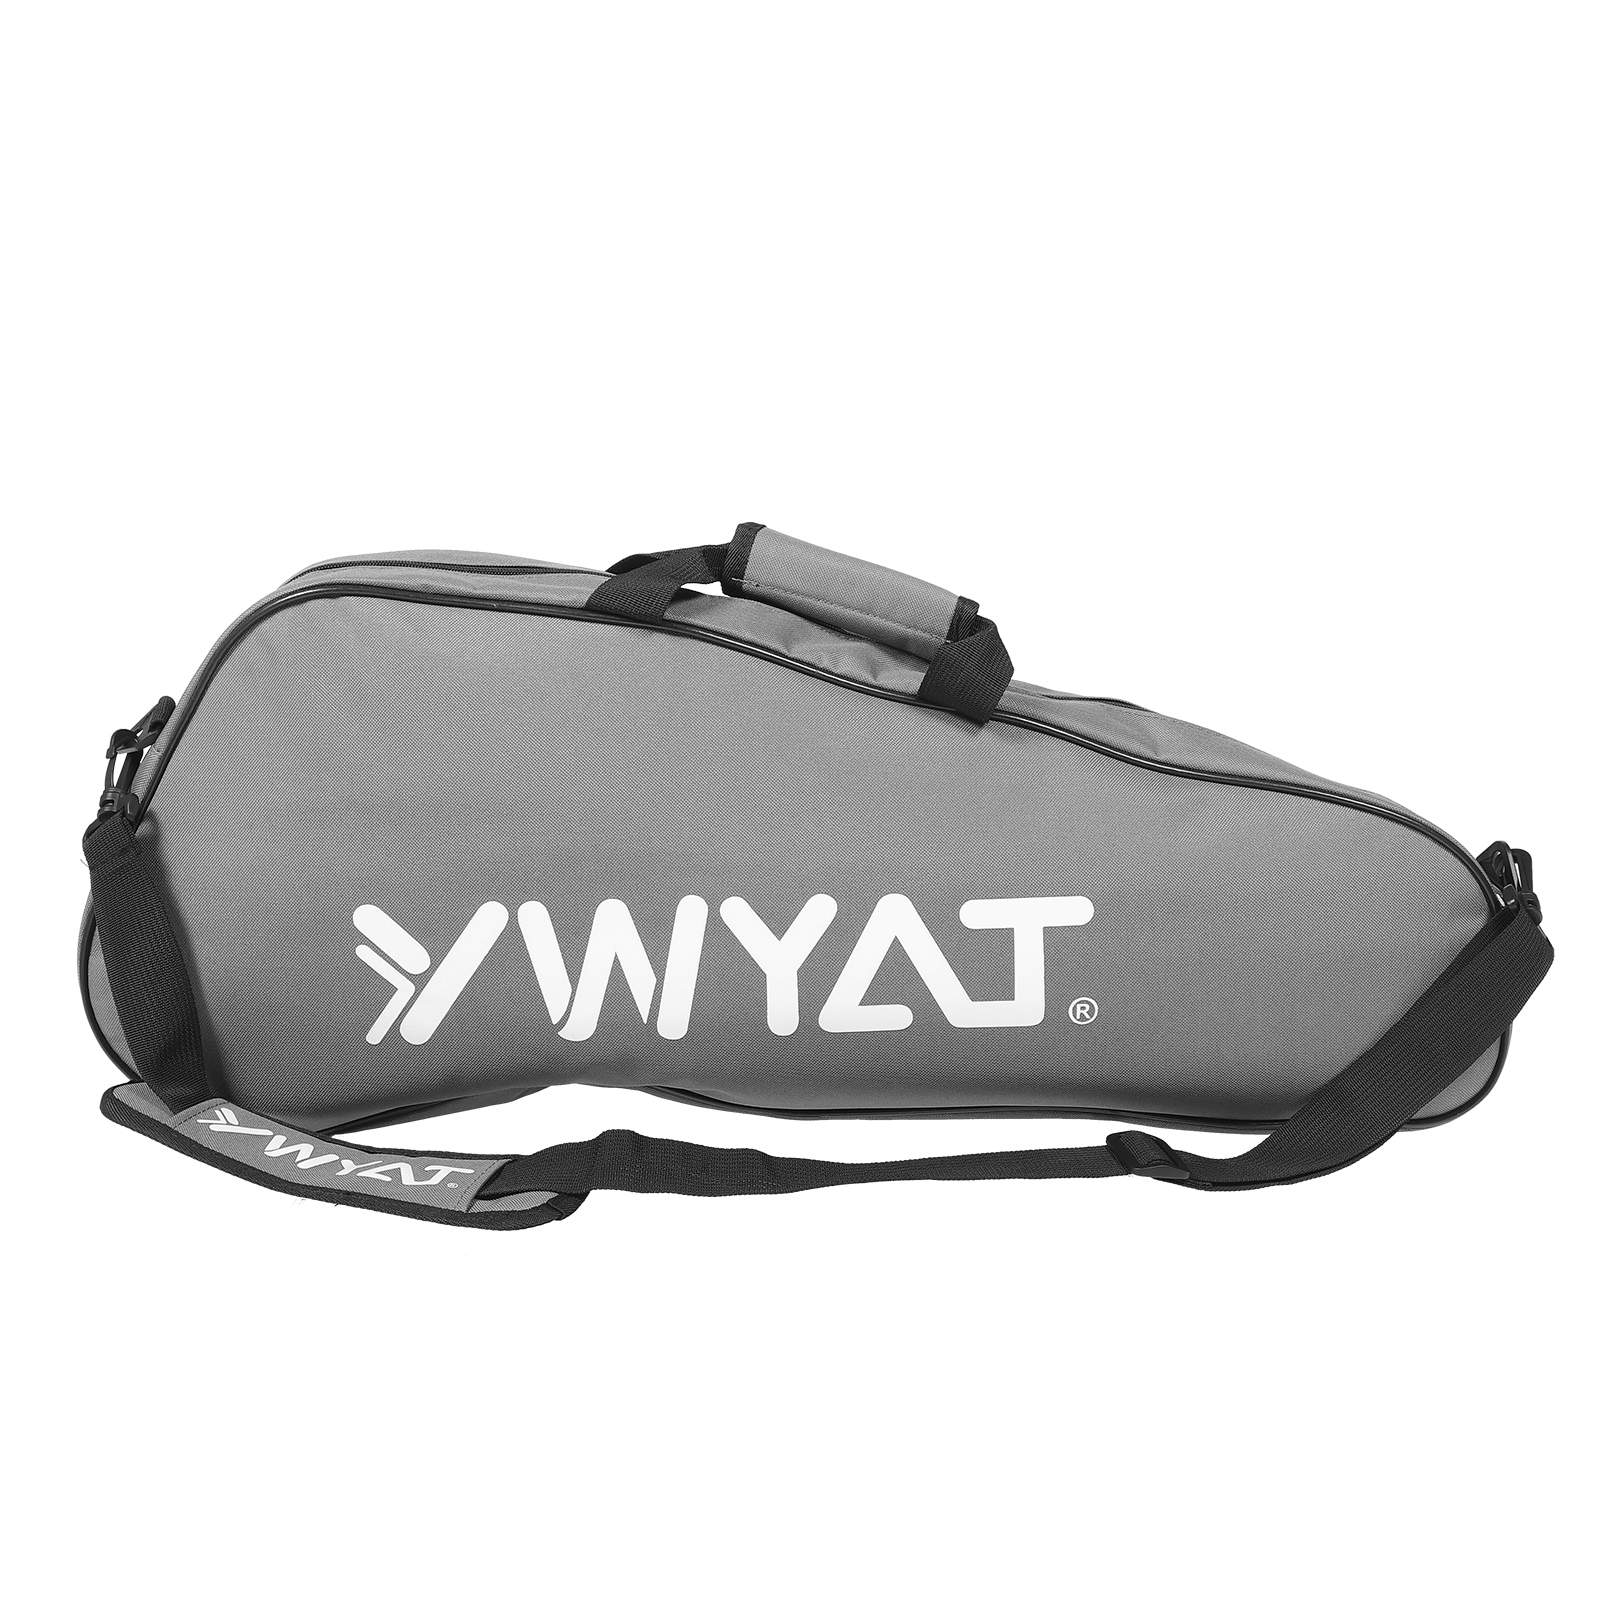 Onaparter Backpack Squash Badminton Racket Bag Accessories Tennis Bags ...